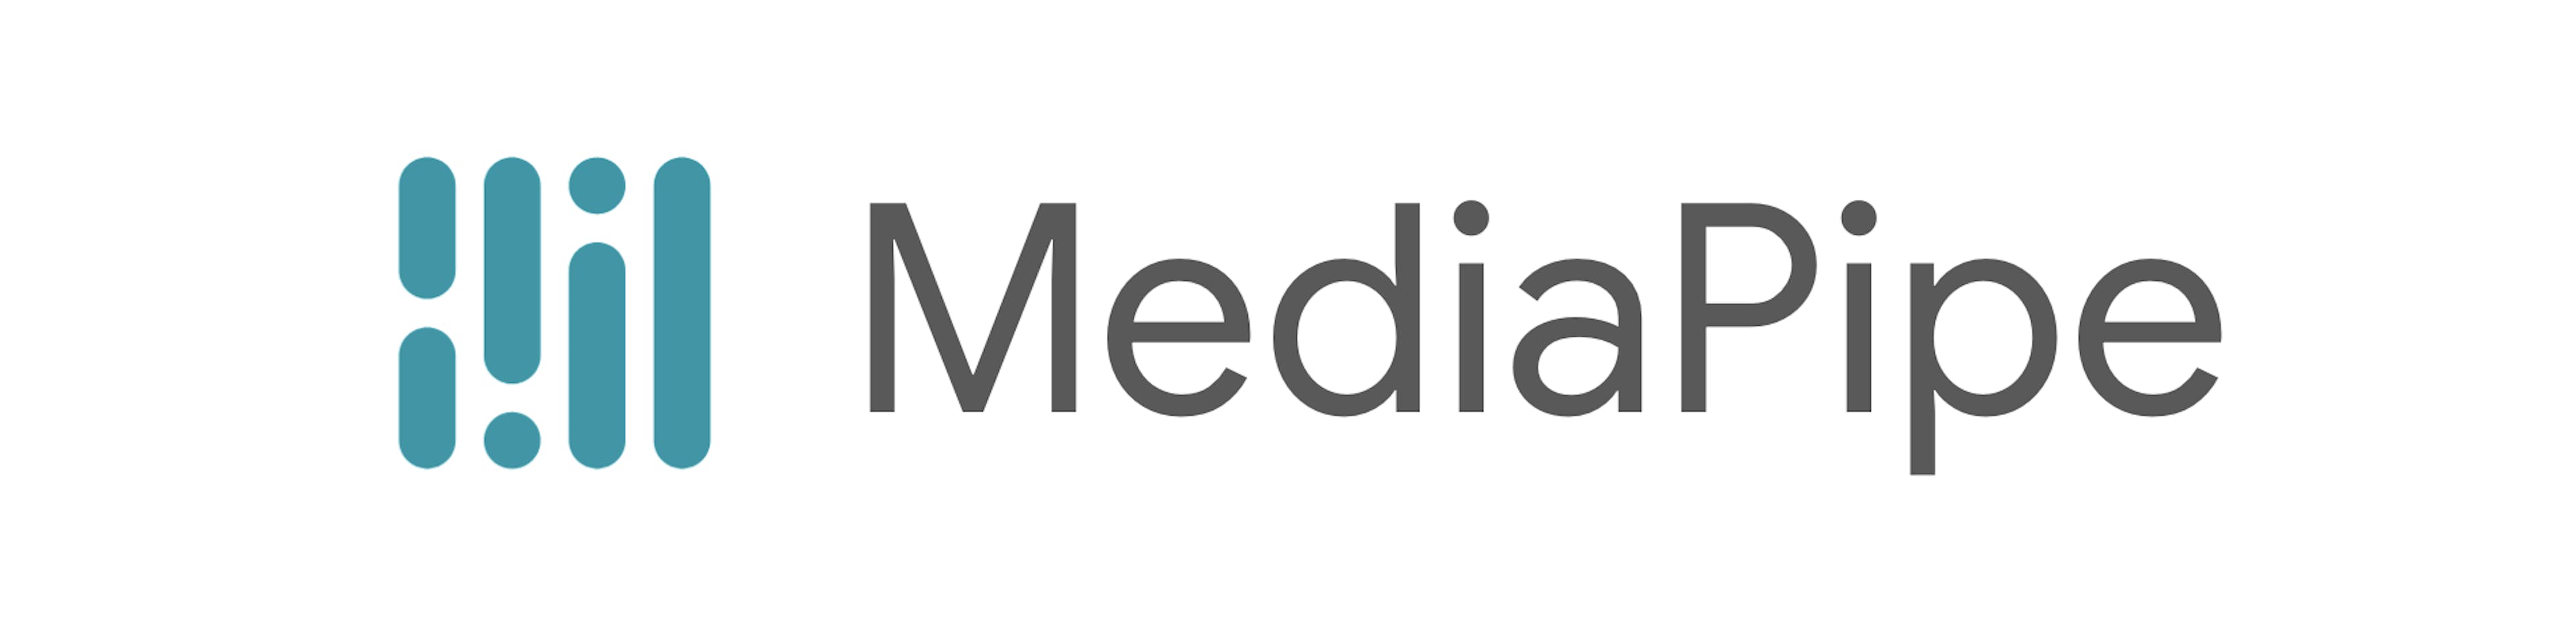 MediaPipe Logosu